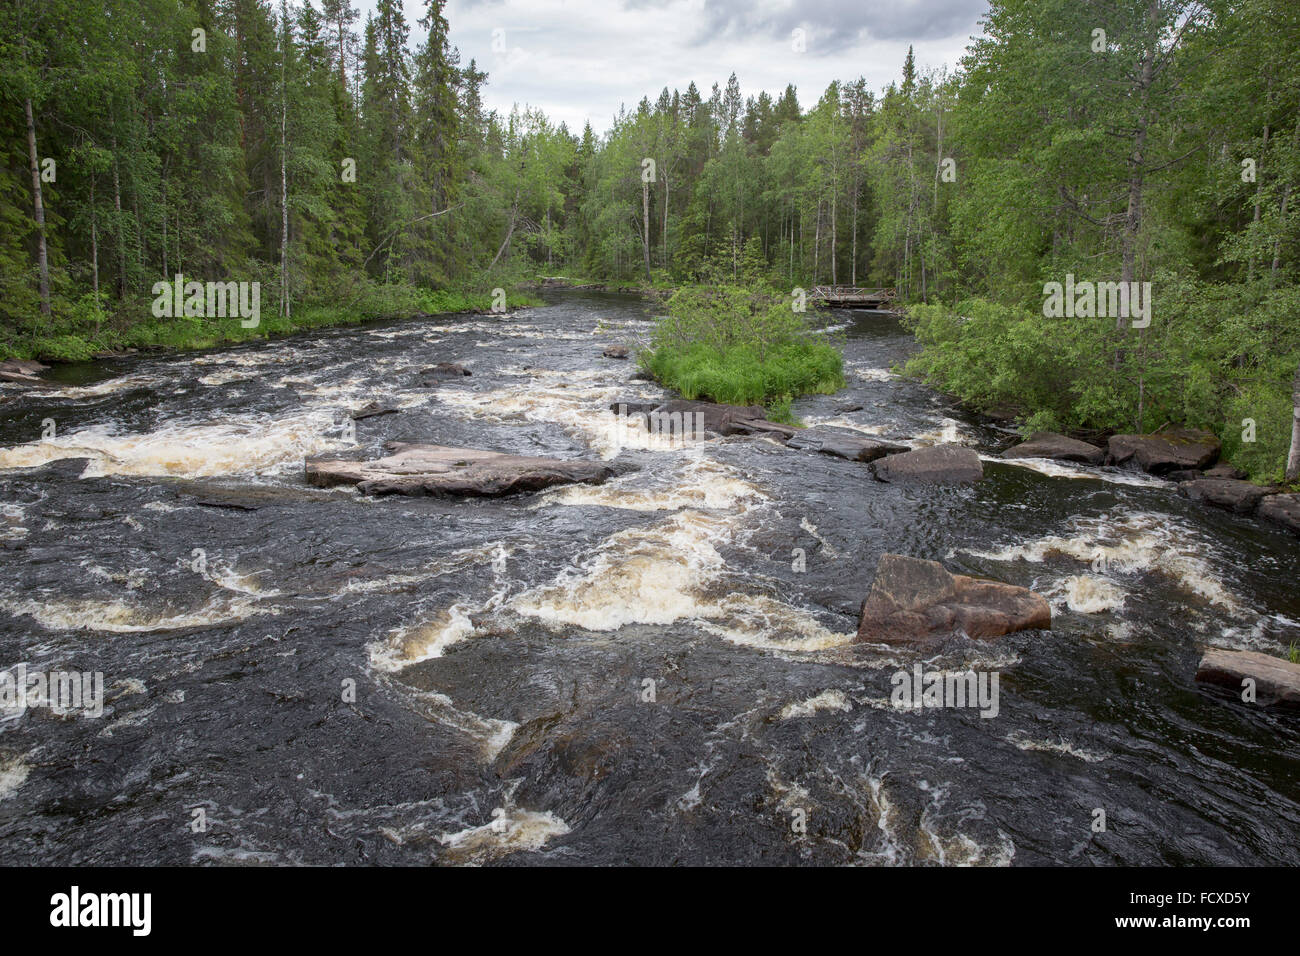 Raudanjok River in Lapland Province, Finland Stock Photo